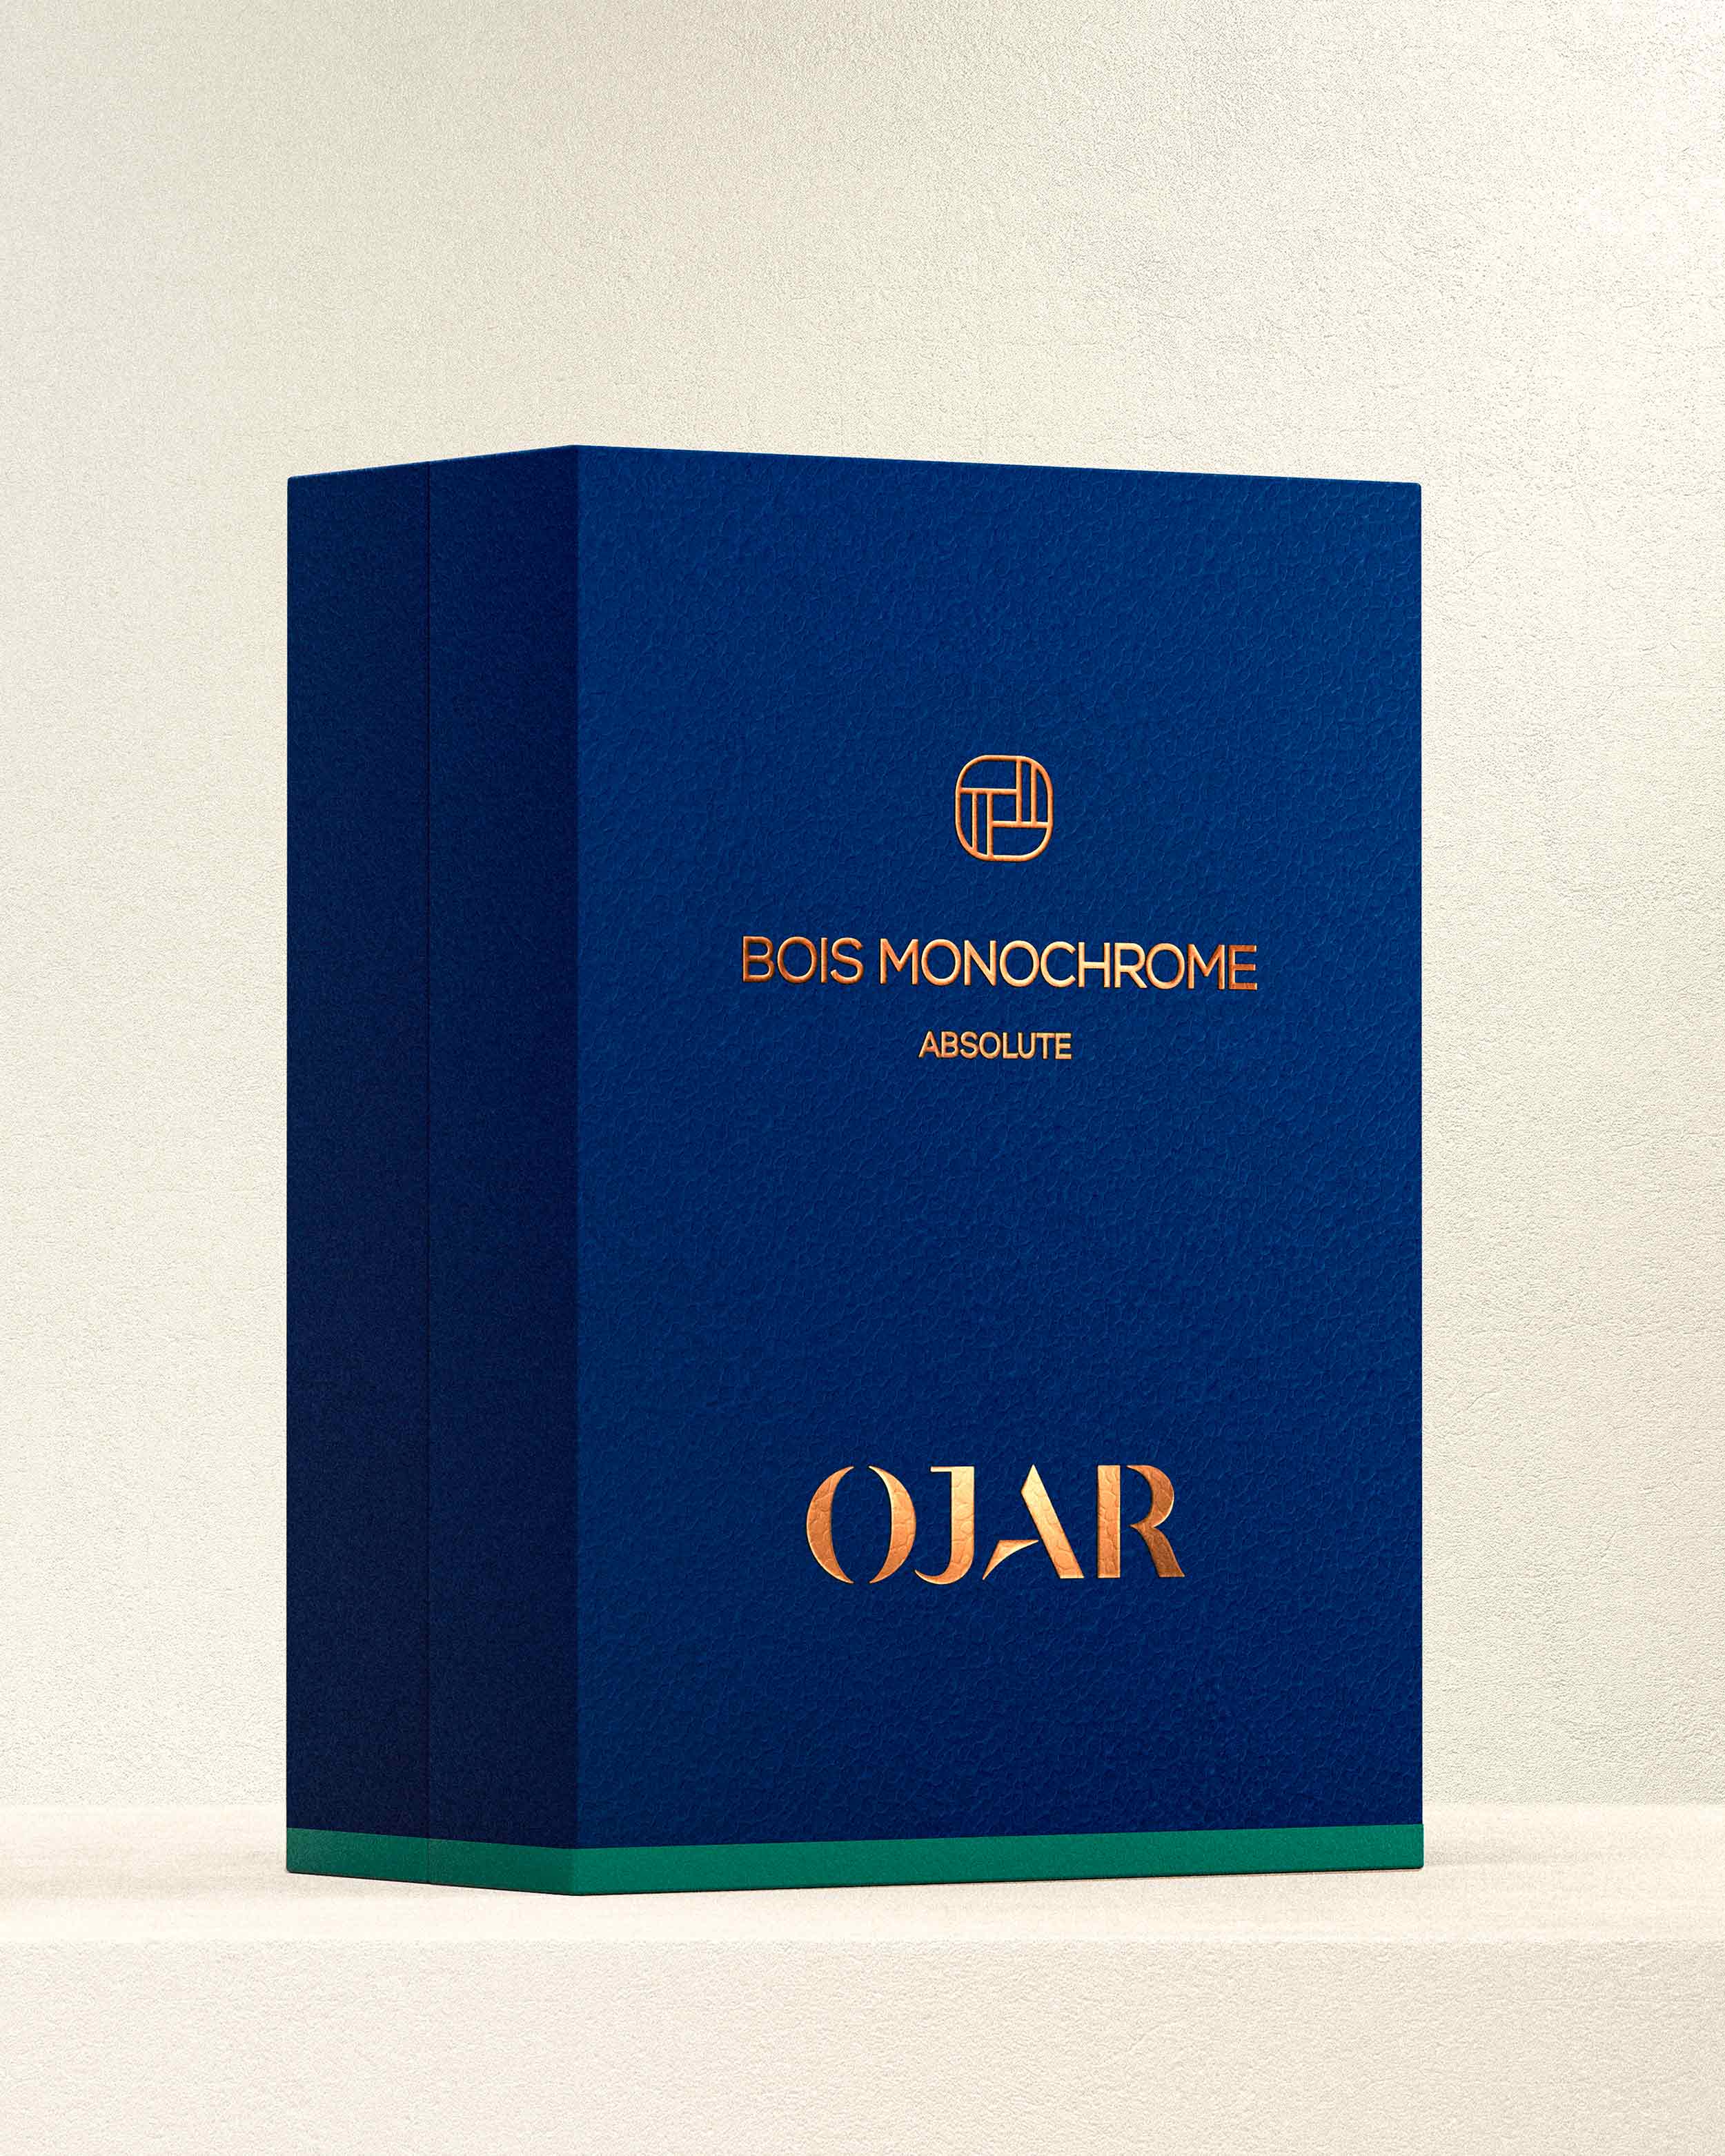 OJAR Absolute Bois Monochrome Perfume Pack